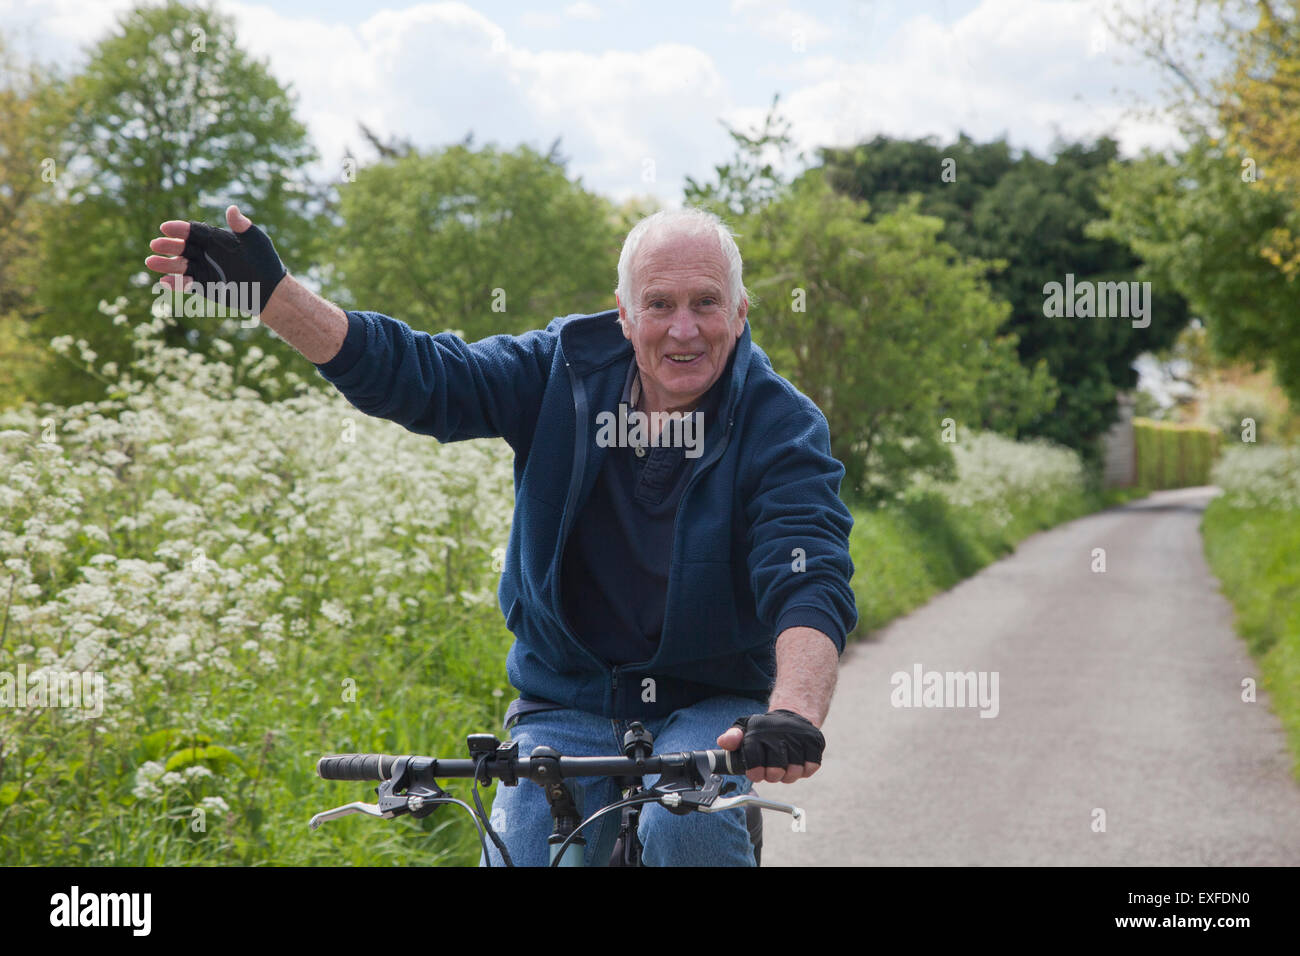 Senior man riding bike on country lane Banque D'Images